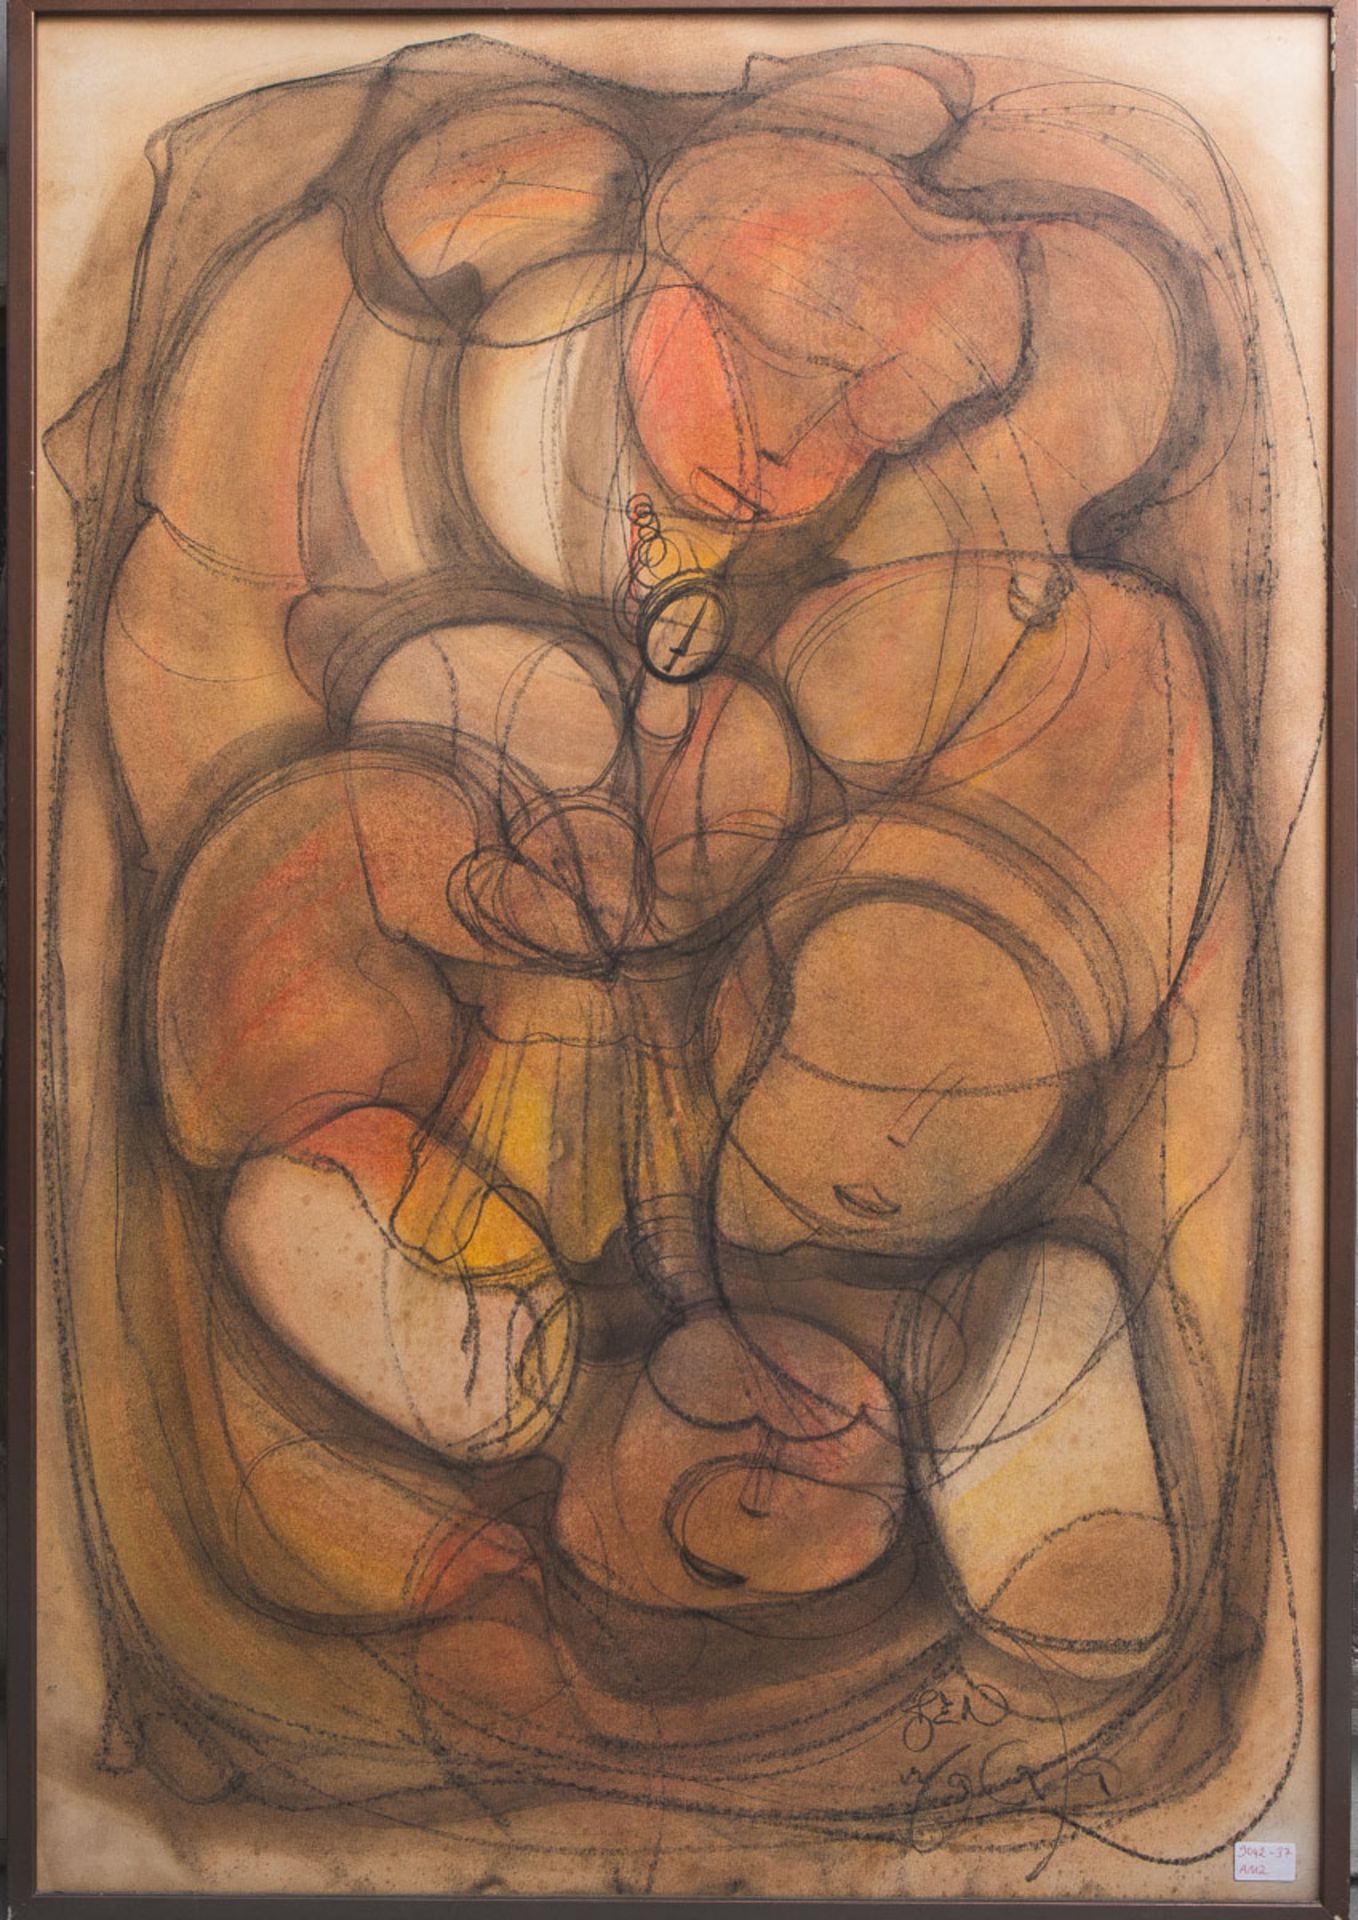 Macala, Ben (1937 - 1997), "Abstrakt II"